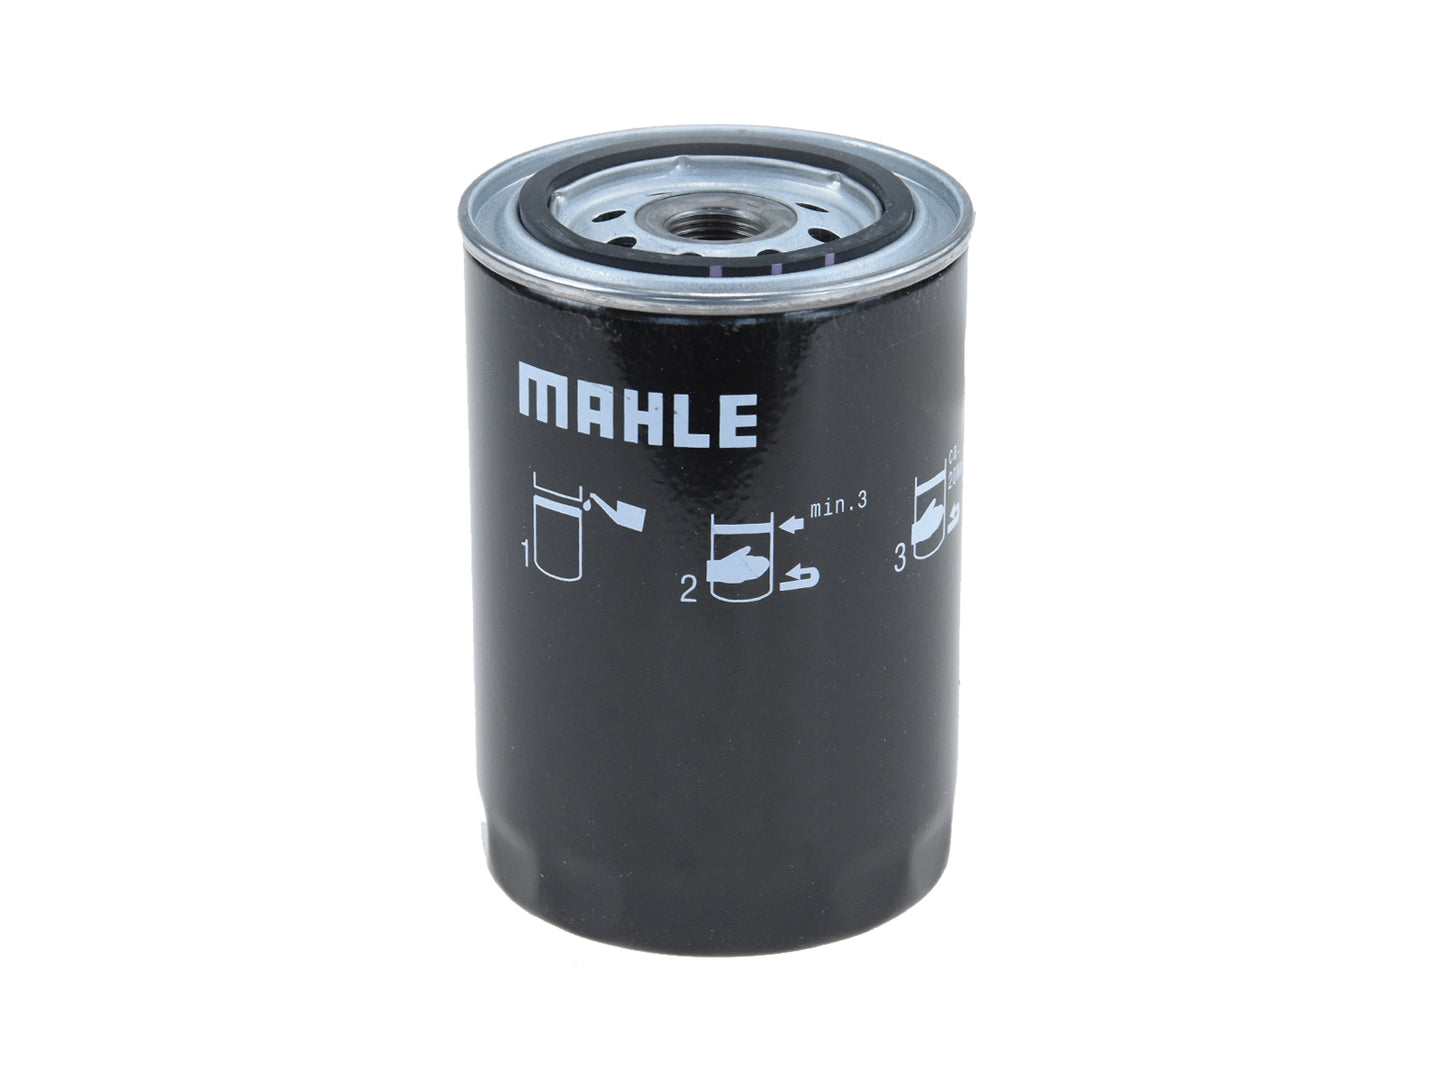 Mahle oil filter for Porsche 911 F until '71 914-6 engine